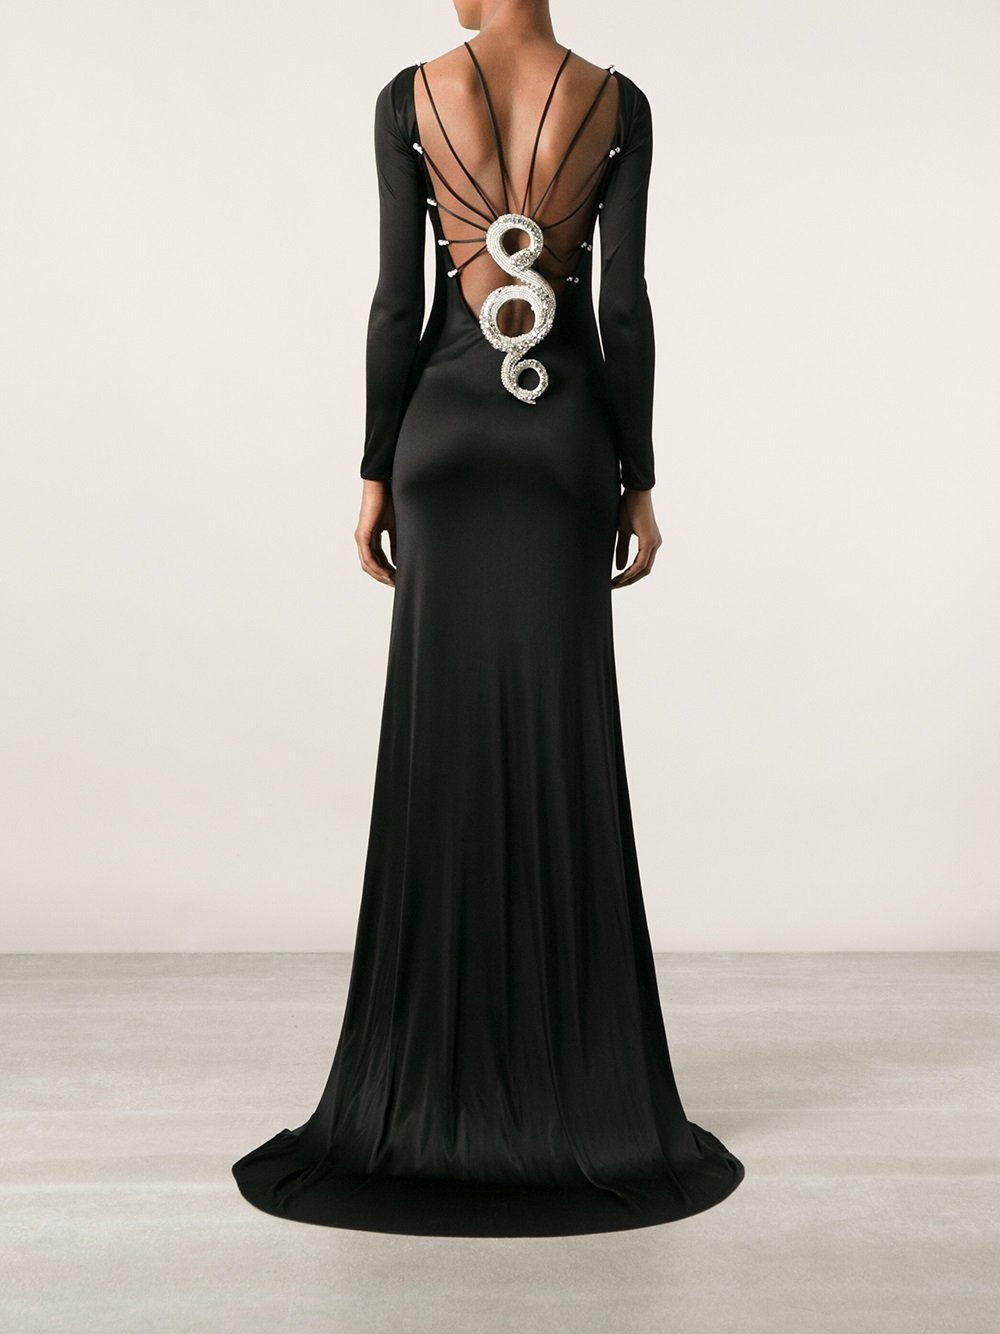 Lyst - Roberto Cavalli Snake Back Evening Dress in Black